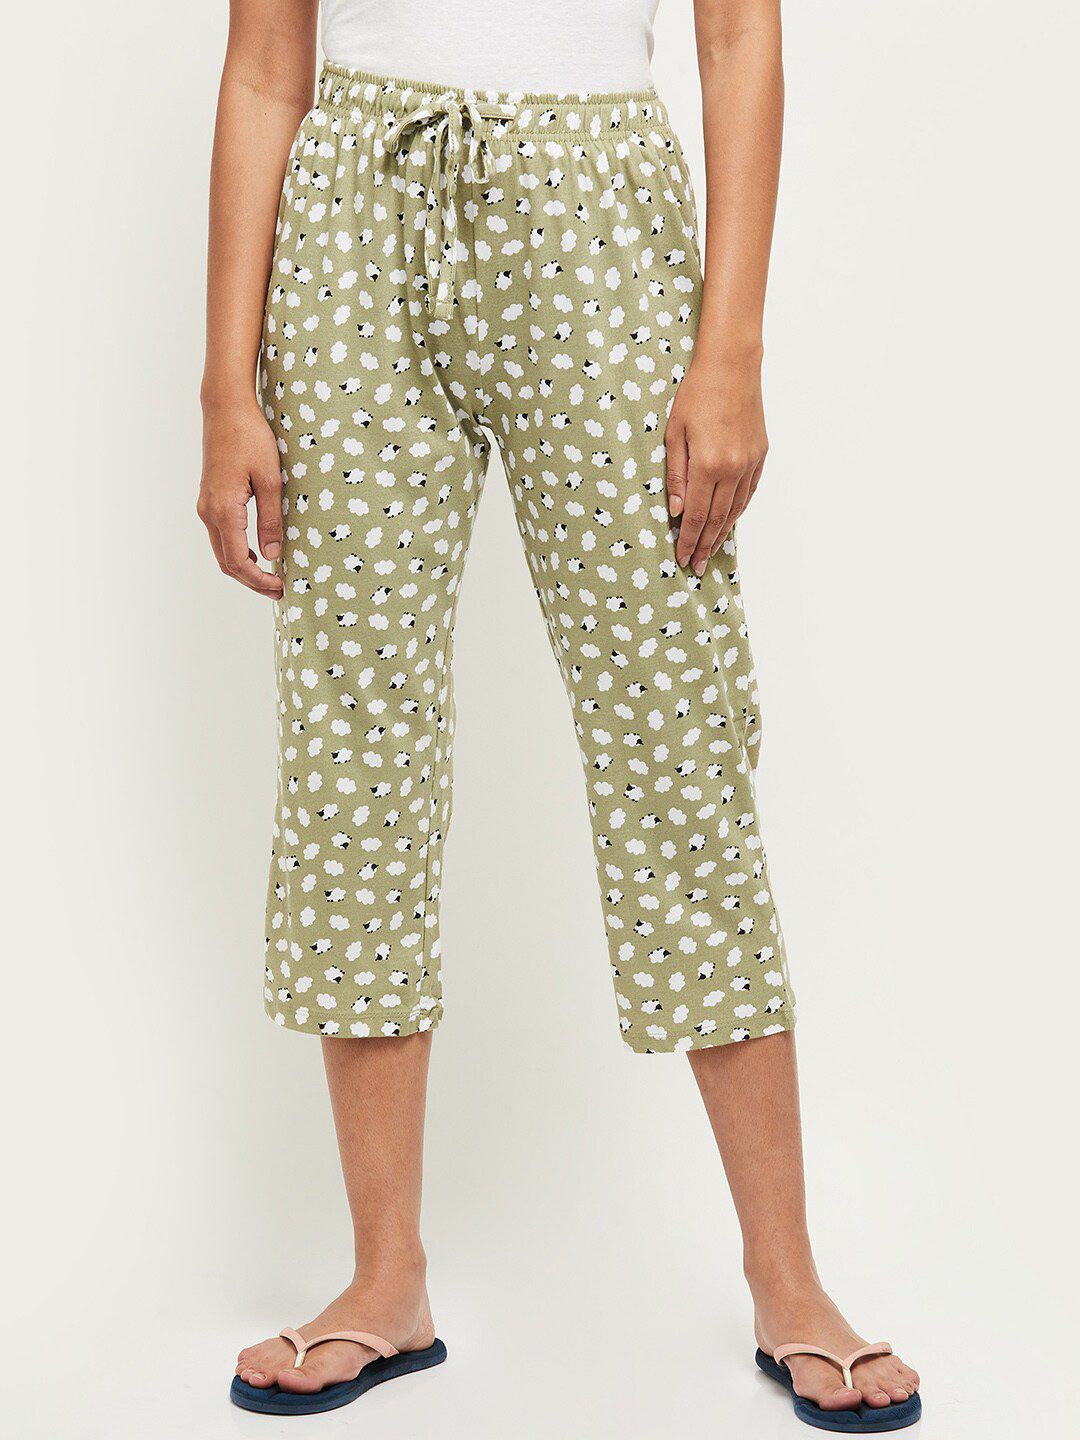 max Women Green Animal Printed Cotton Pyjamas Price in India